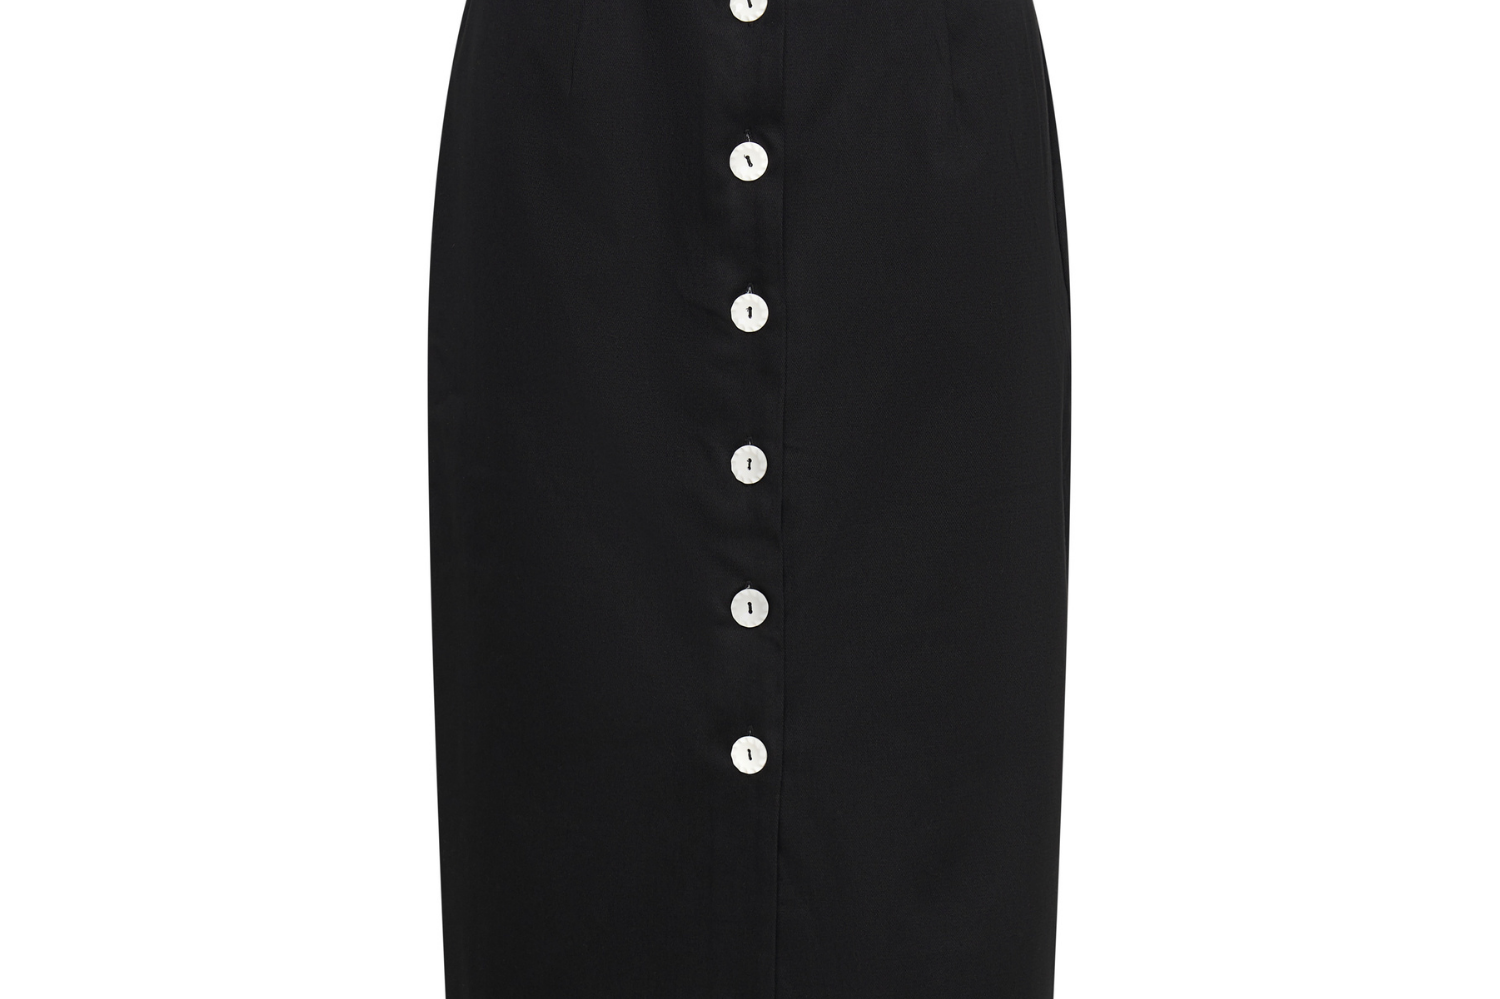 Florence Fluttering Skirt in Black Gingham detail OFFER: GET TOP FREE WHEN YOU BUY SKIRT